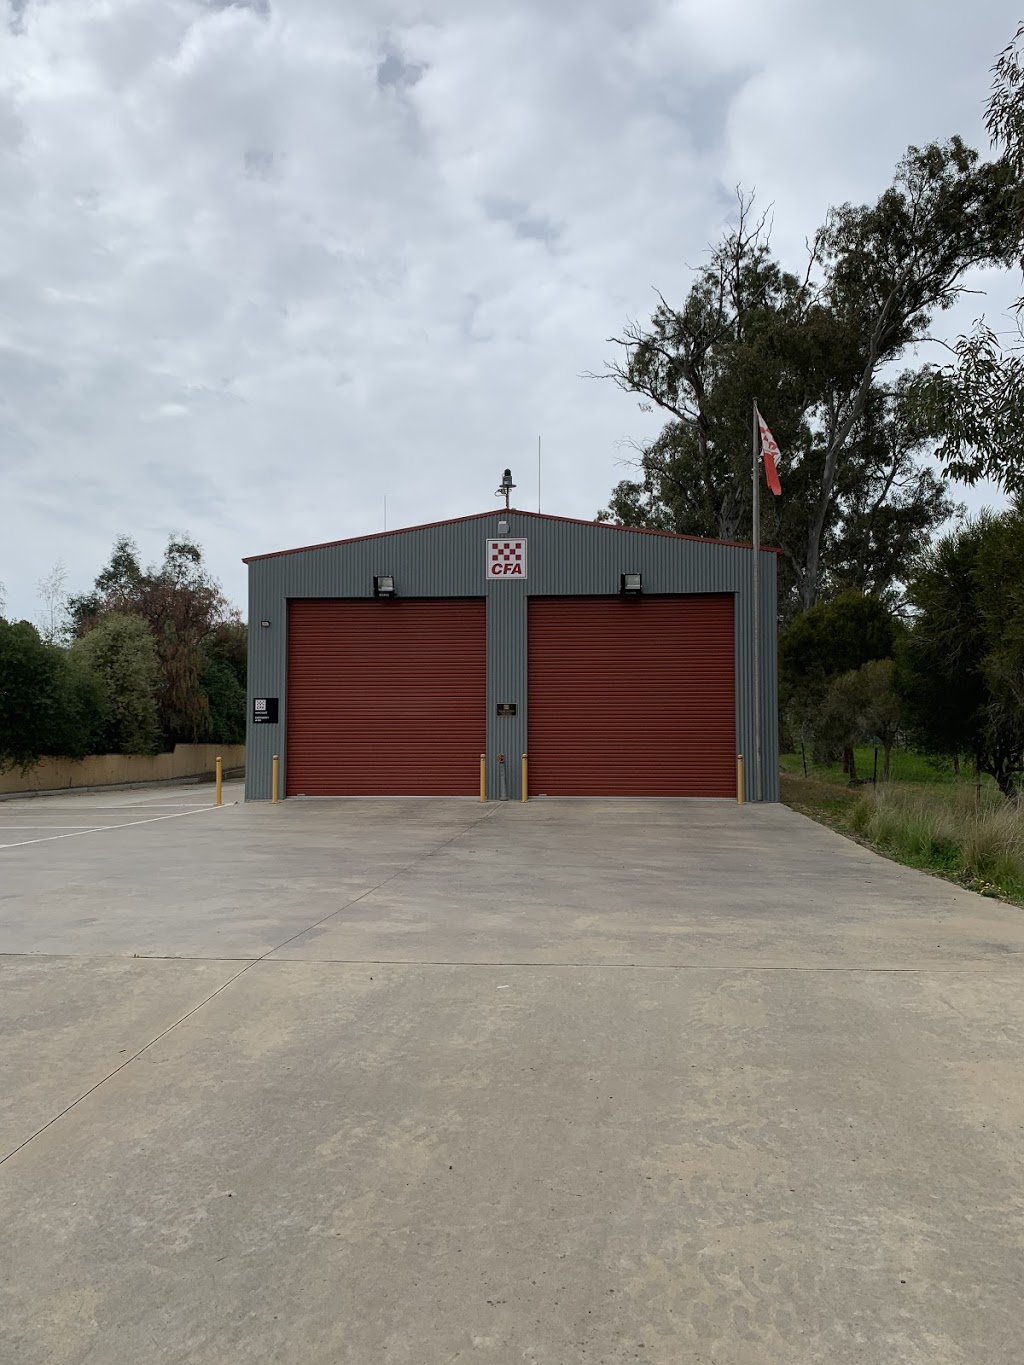 Harcourt CFA Fire station | fire station | 56 High St, Harcourt VIC 3453, Australia